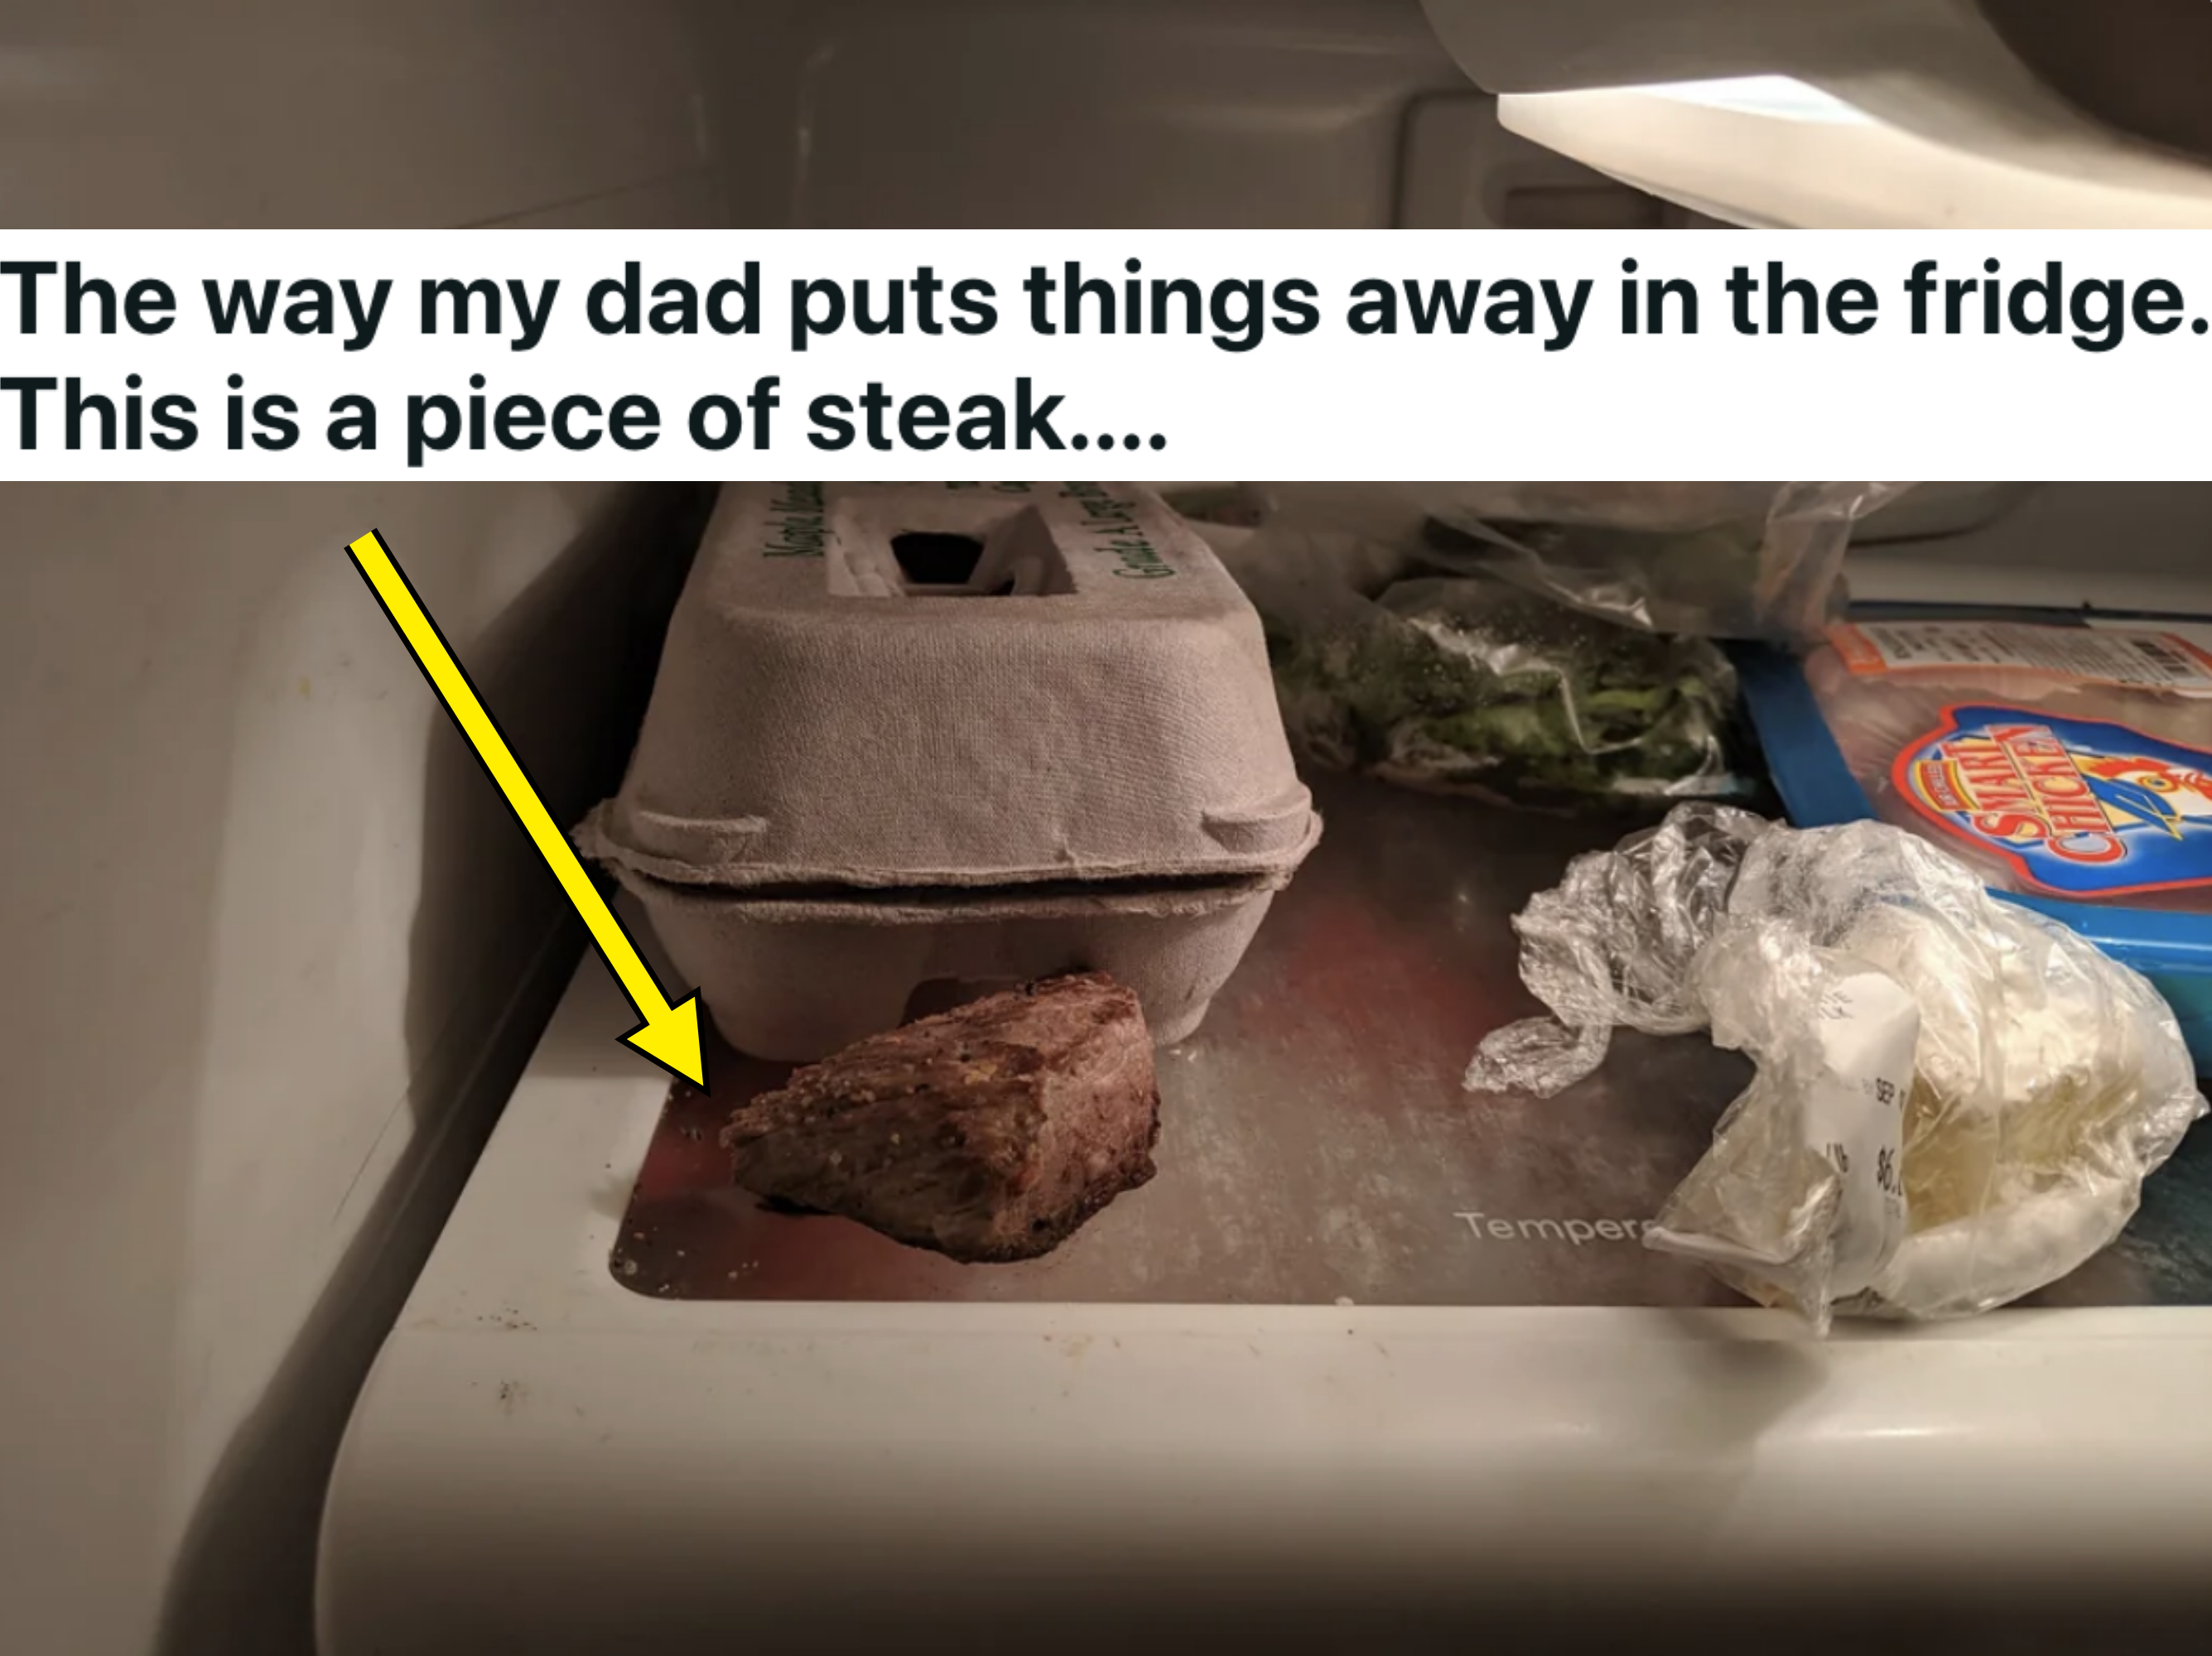 A piece of meat on a fridge shelf